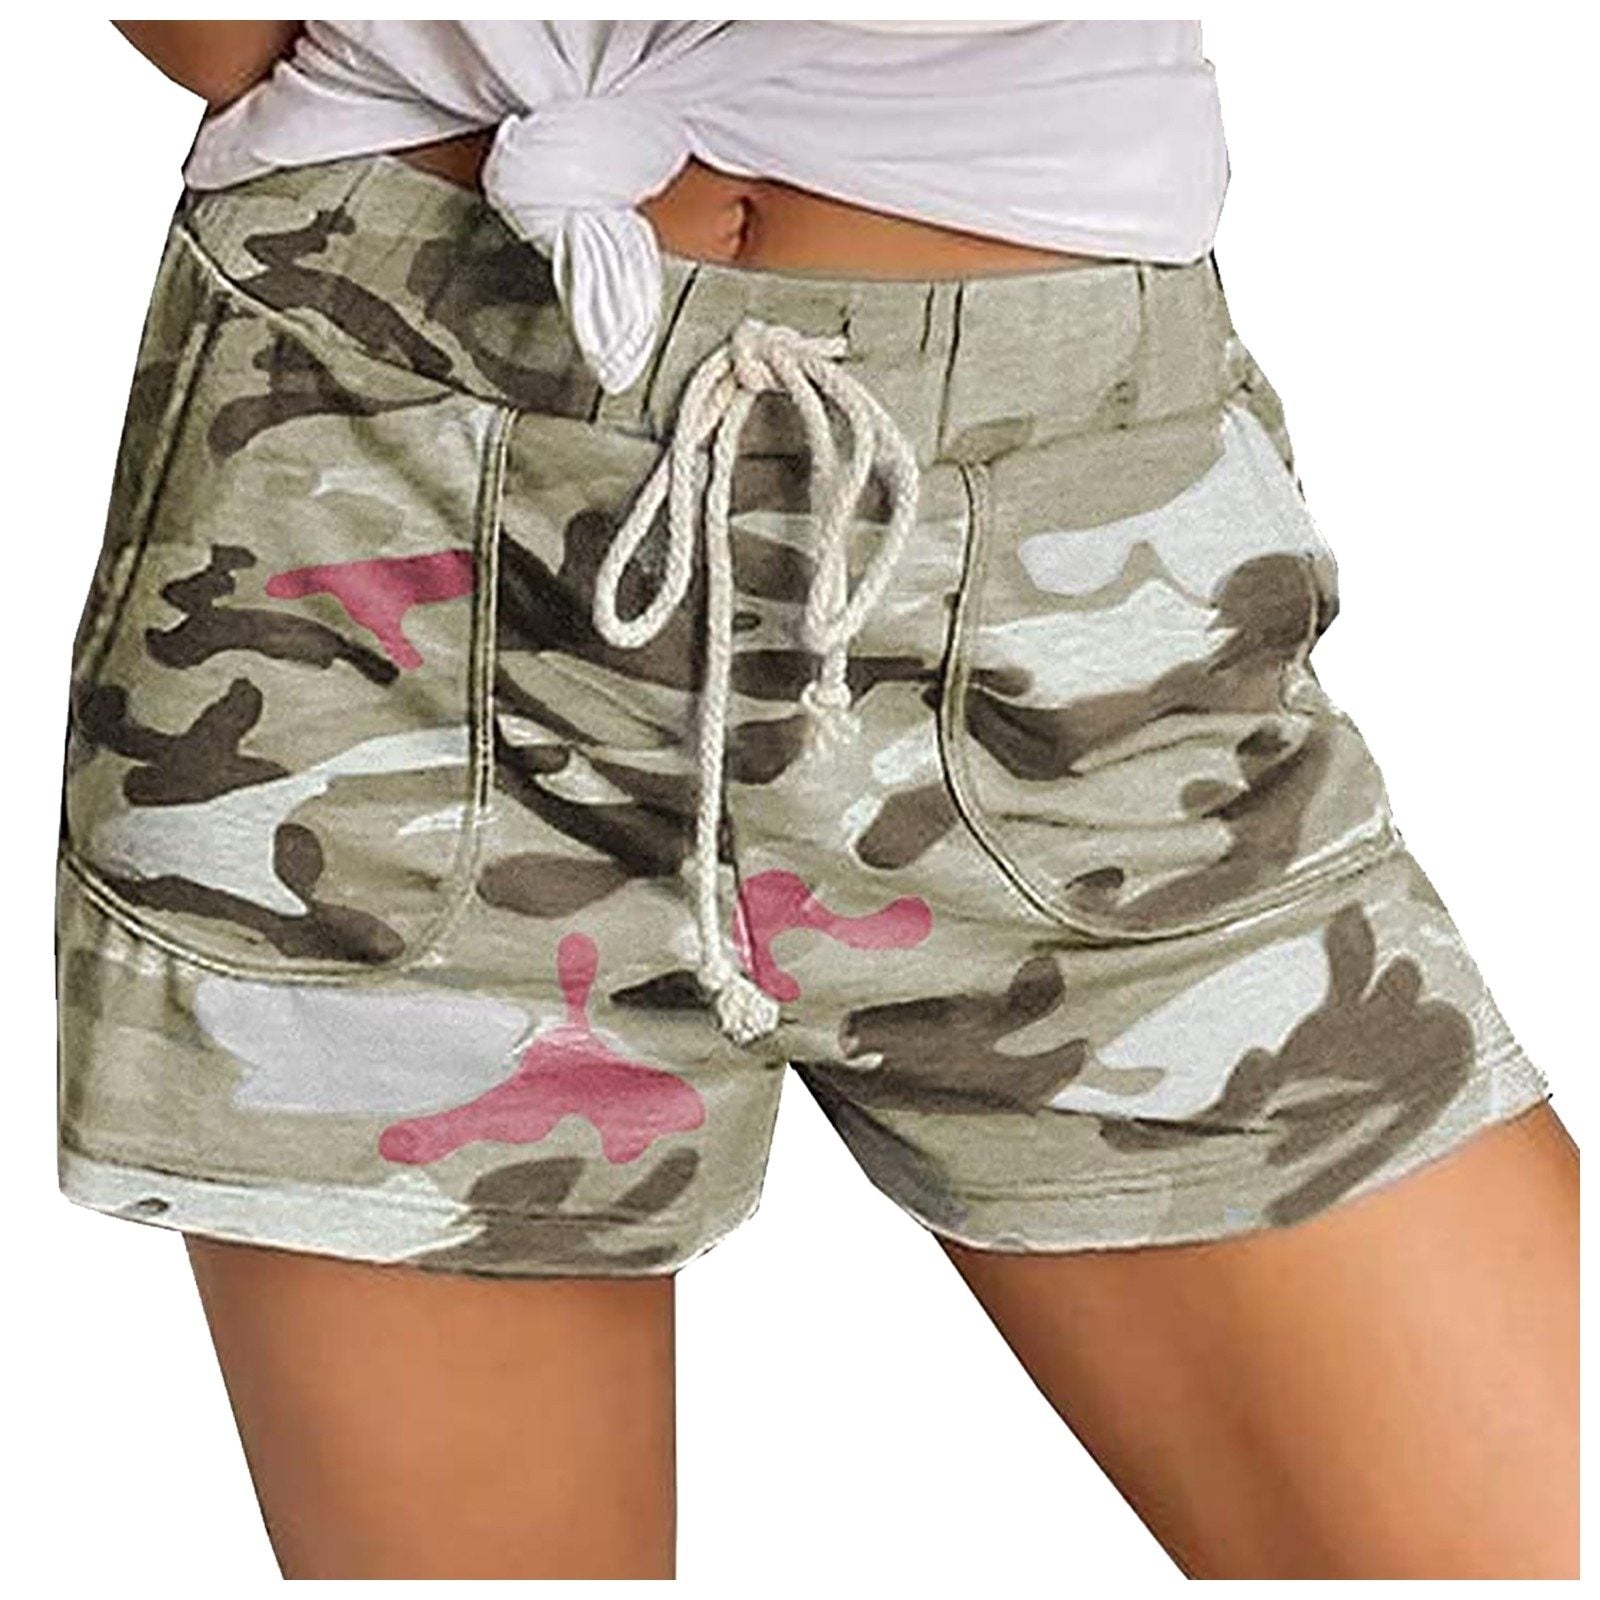 Pantalones corte militar para mujeres